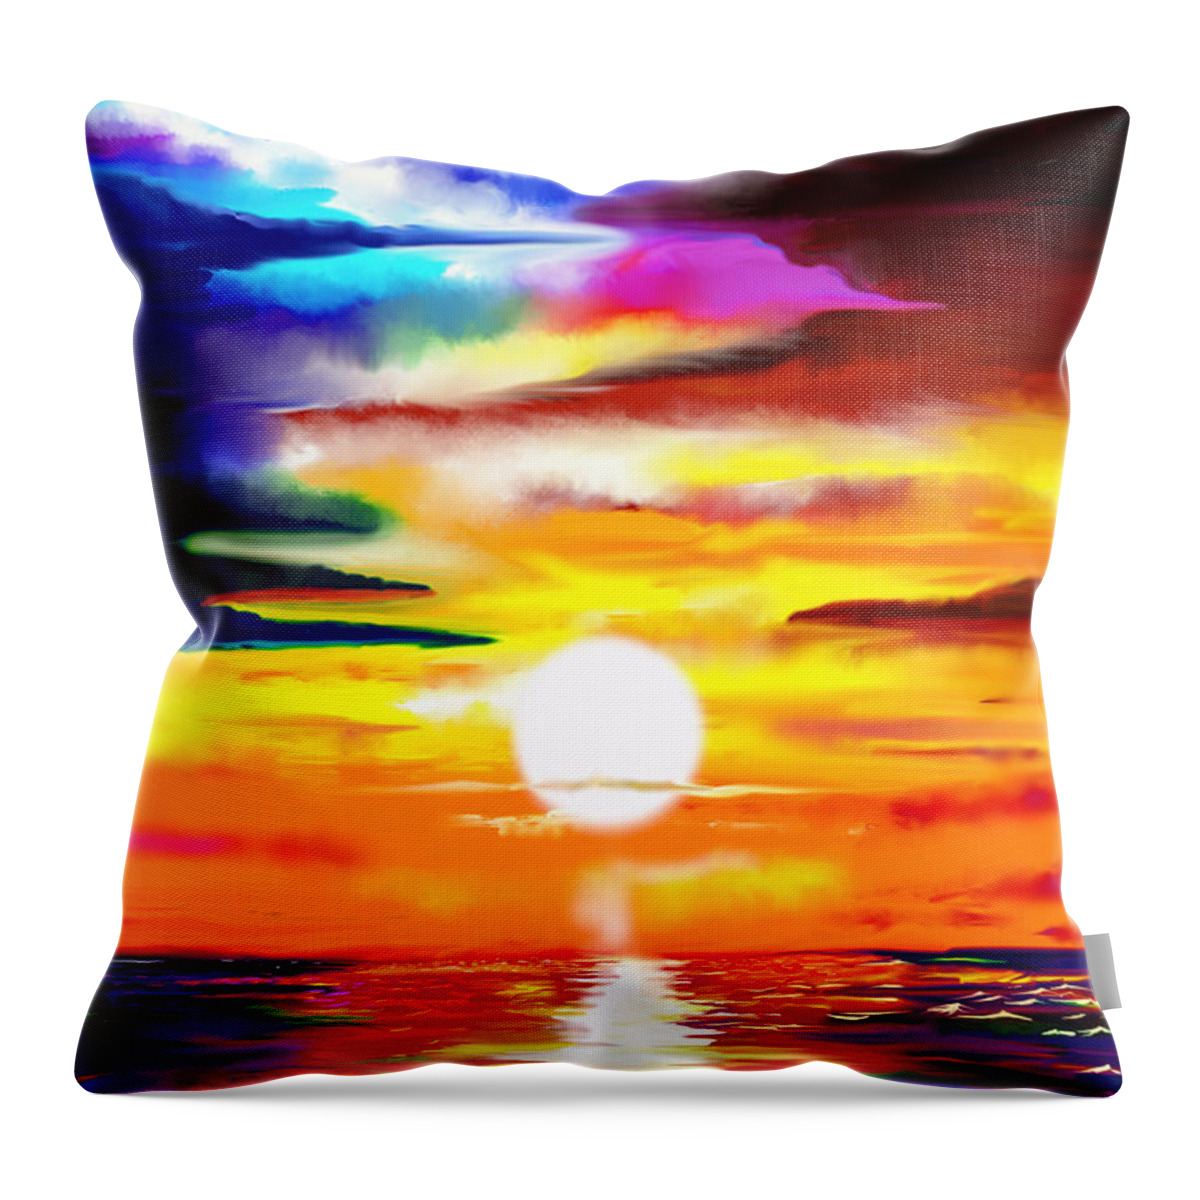 Sky Throw Pillow featuring the digital art Sunset Explosion by Douglas Day Jones